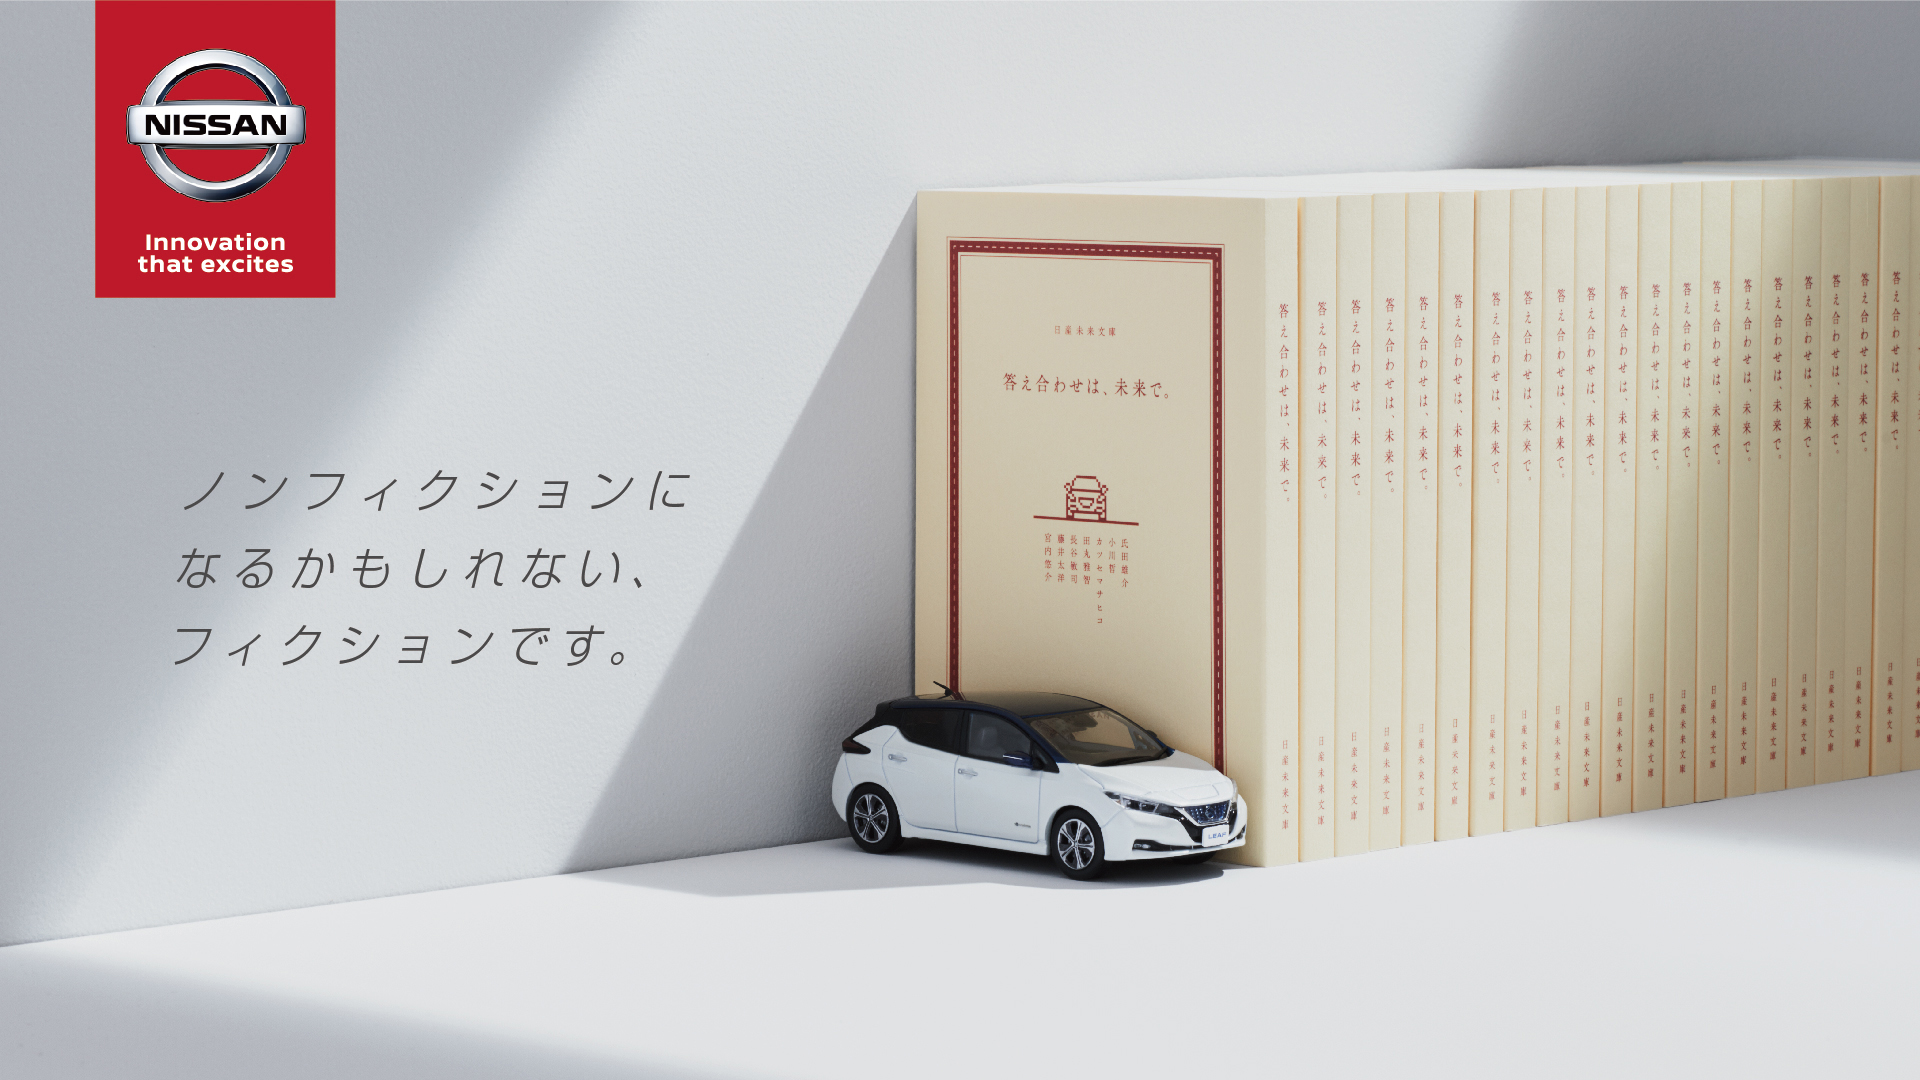 Sf作家たちの想像力を未来の自動運転社会のヒントに 日産自動車 初のsf小説を出版 日産自動車株式会社 日本マーケティング本部のプレスリリース